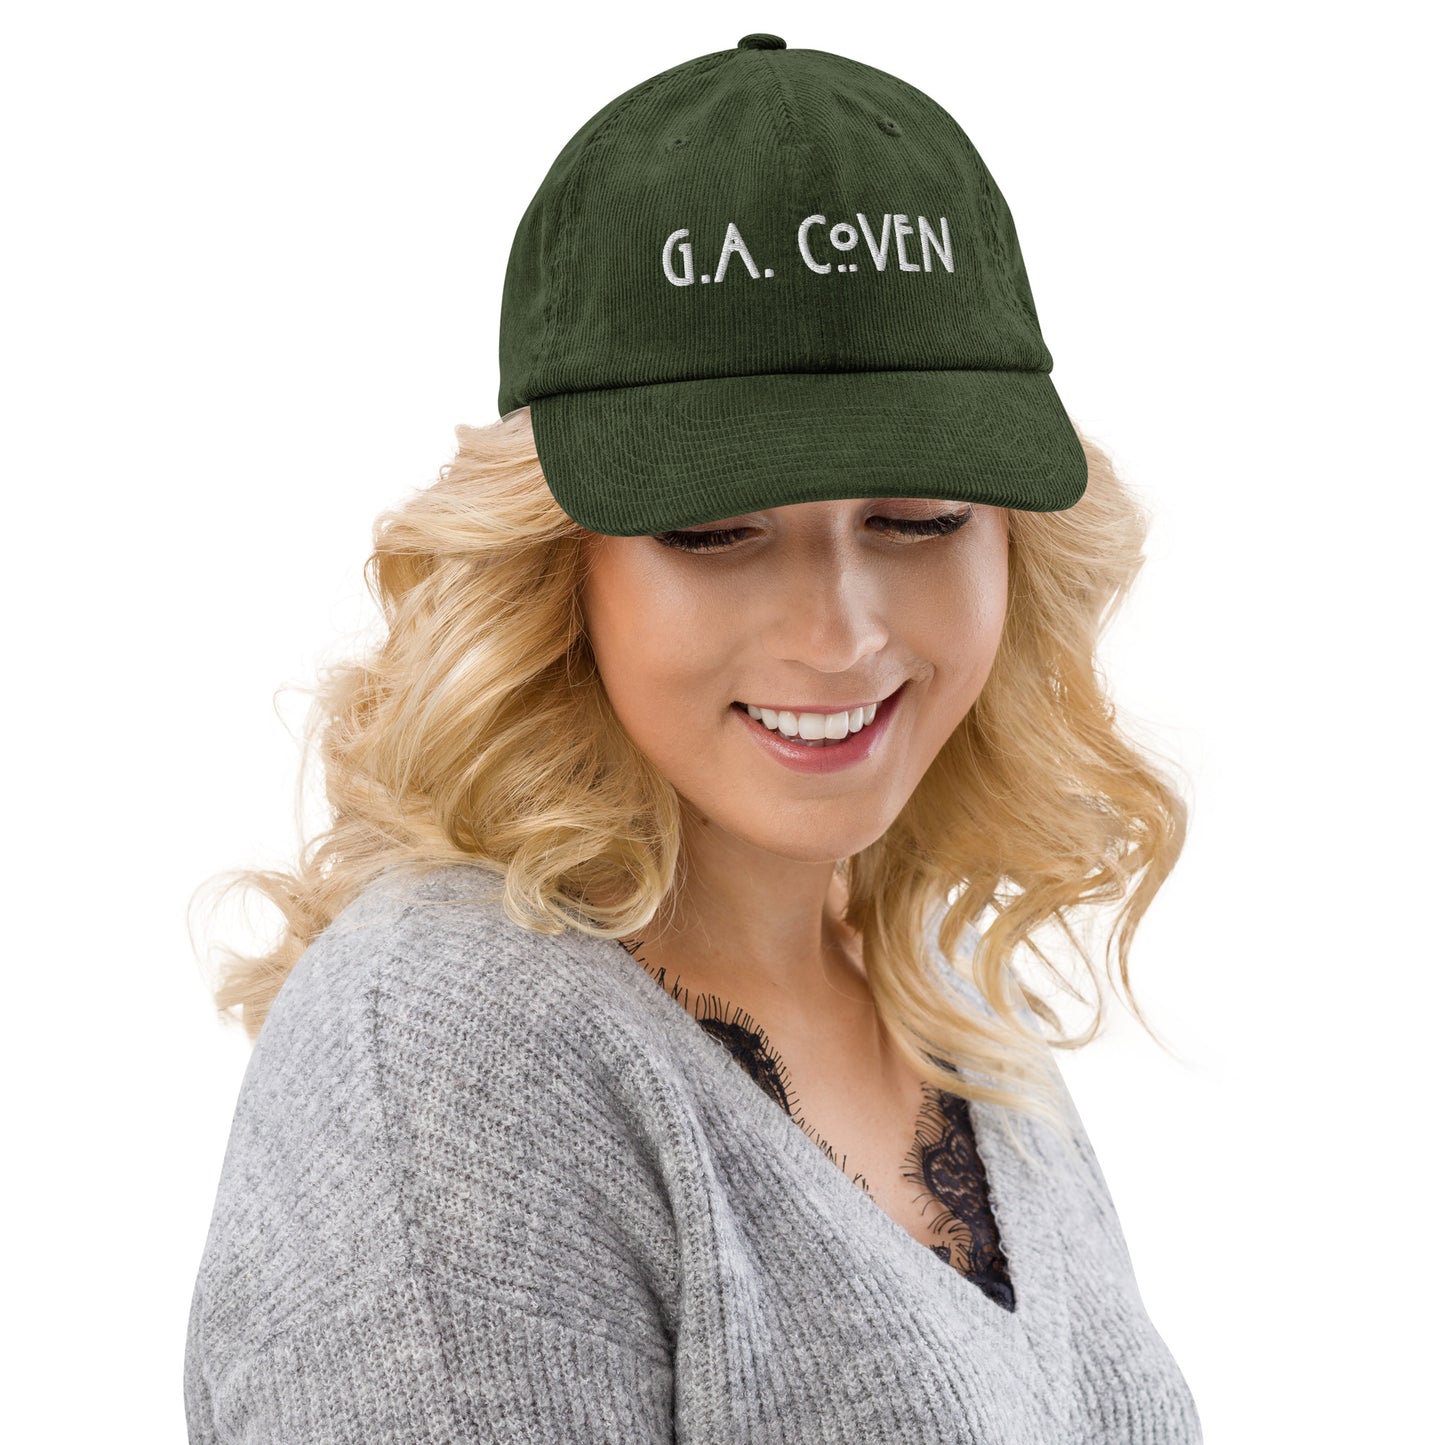 GA COVEN CORDUROY HAT